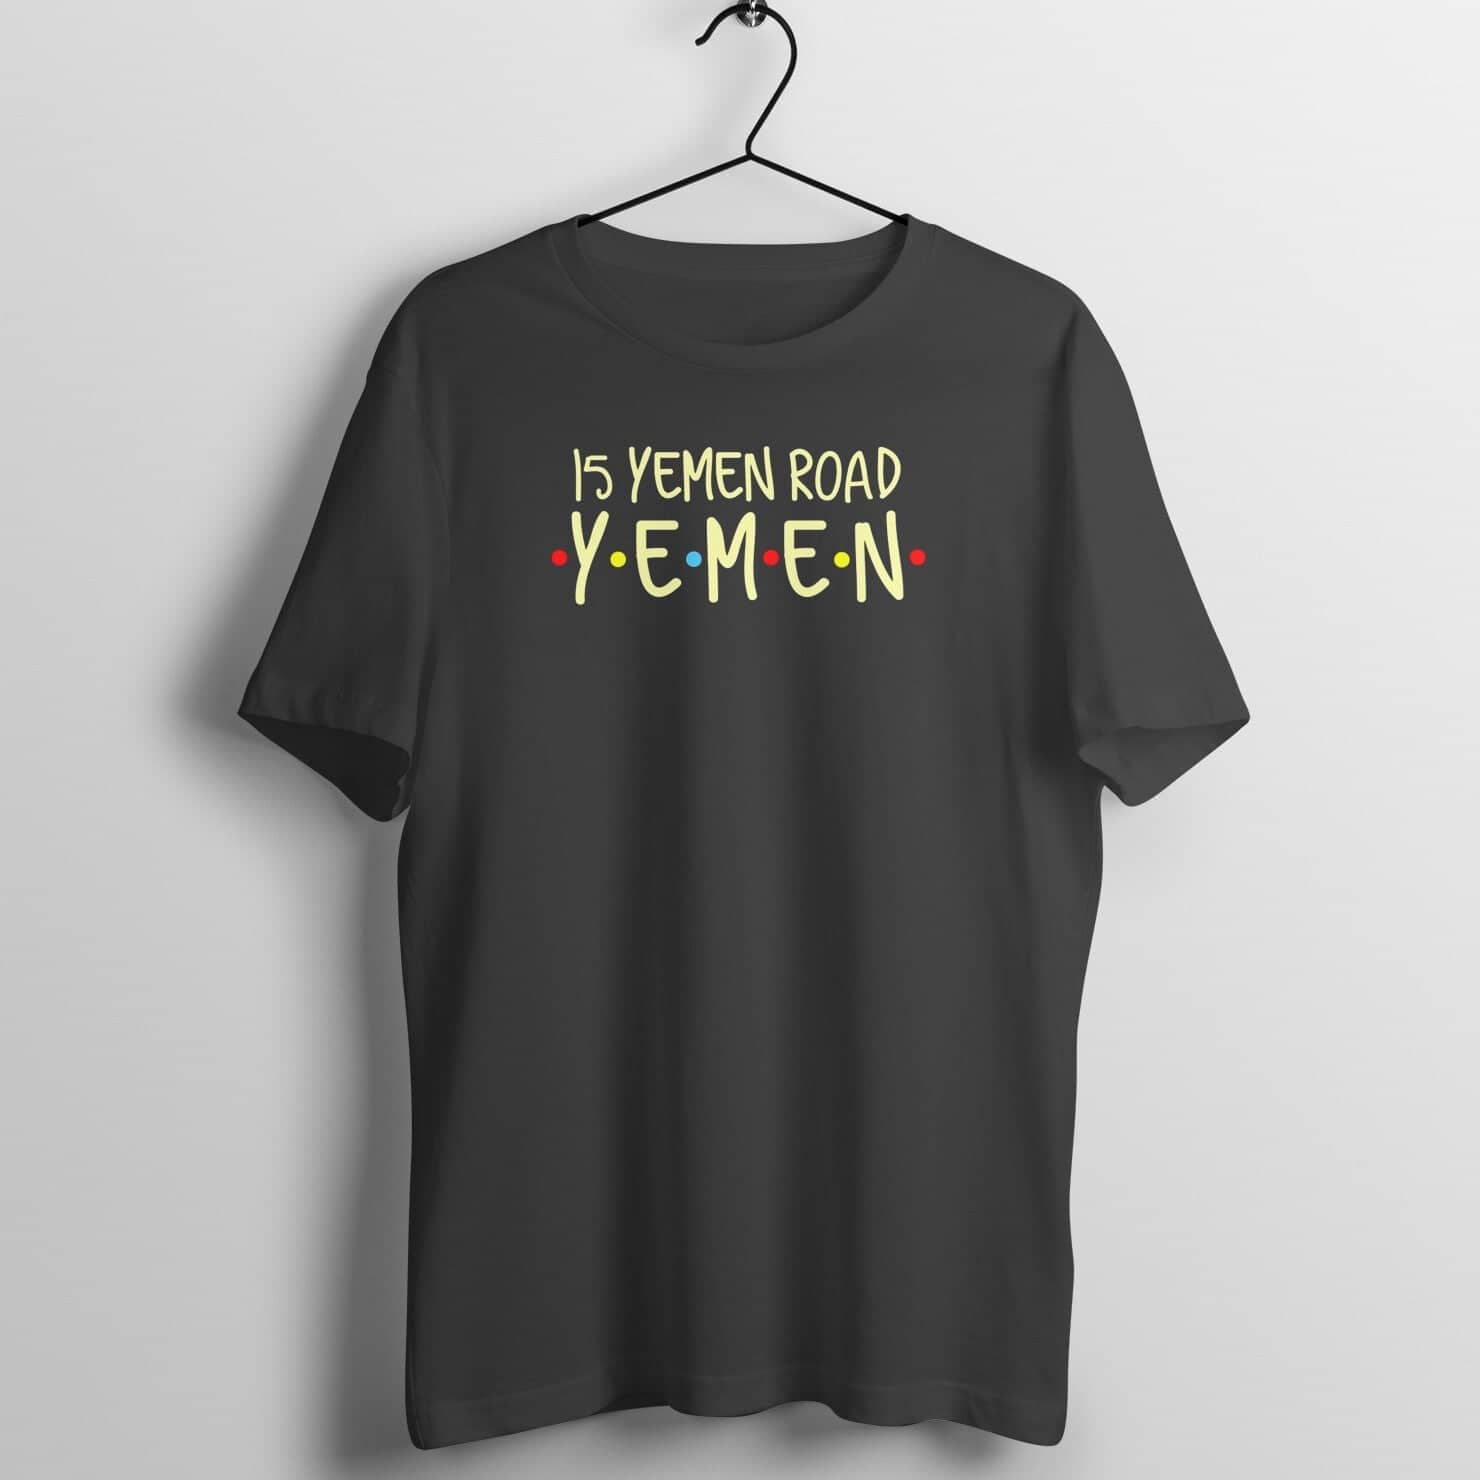 15 Yemen Road Yemen Funny Black Chandler Bing Friends Black T Shirt for Men and Women Printrove Black S 